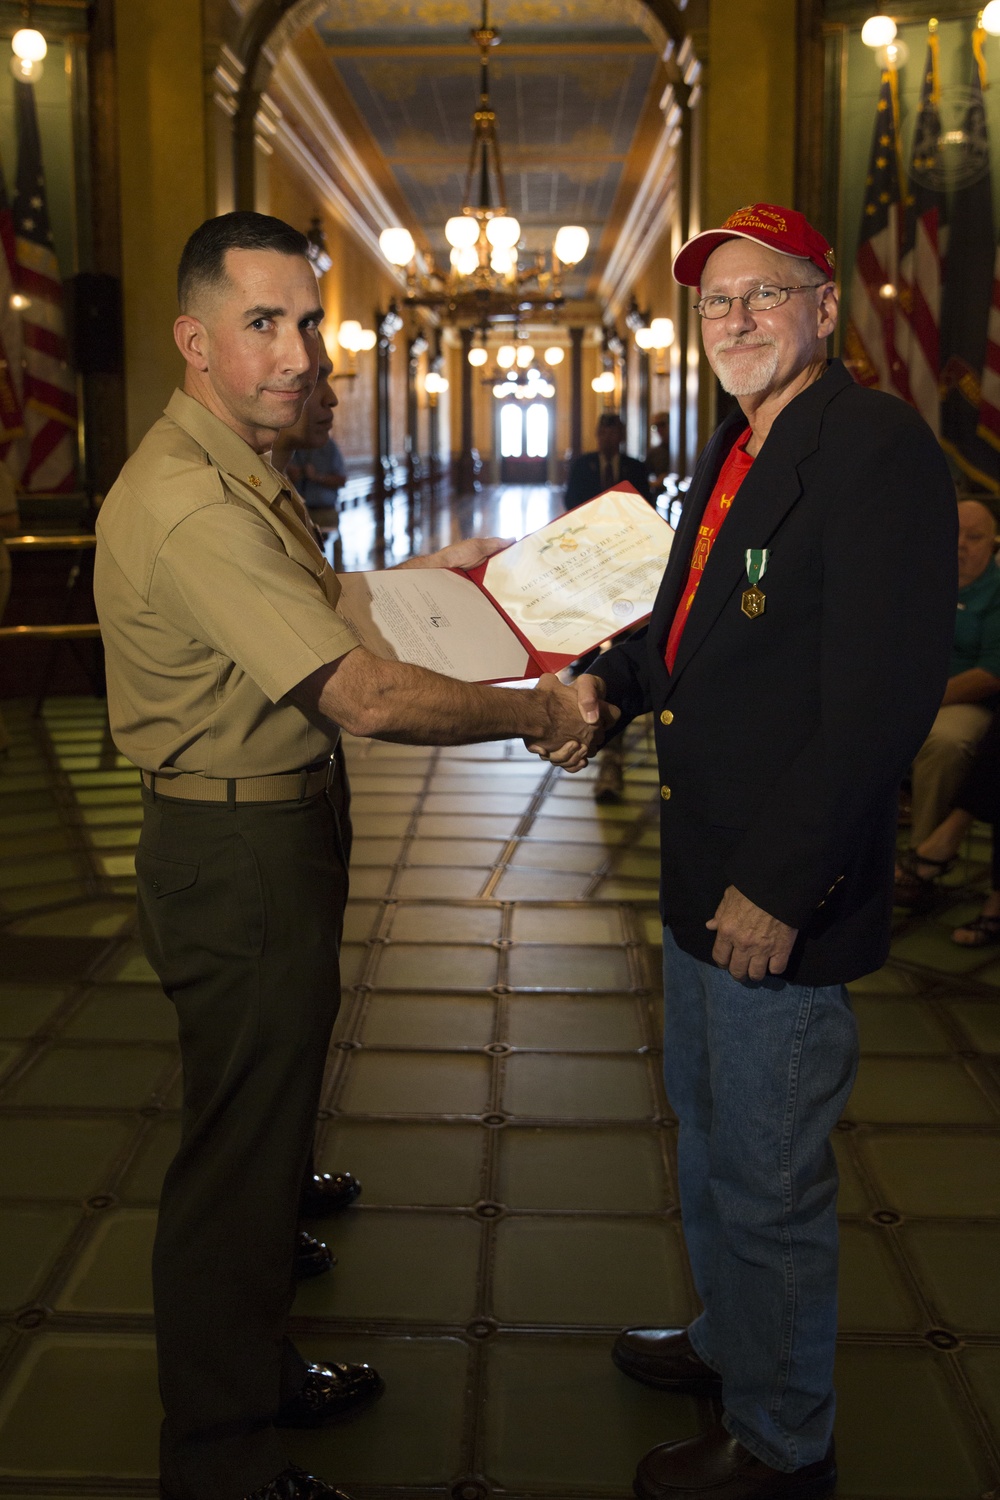 Vietnam veteran honored for his service